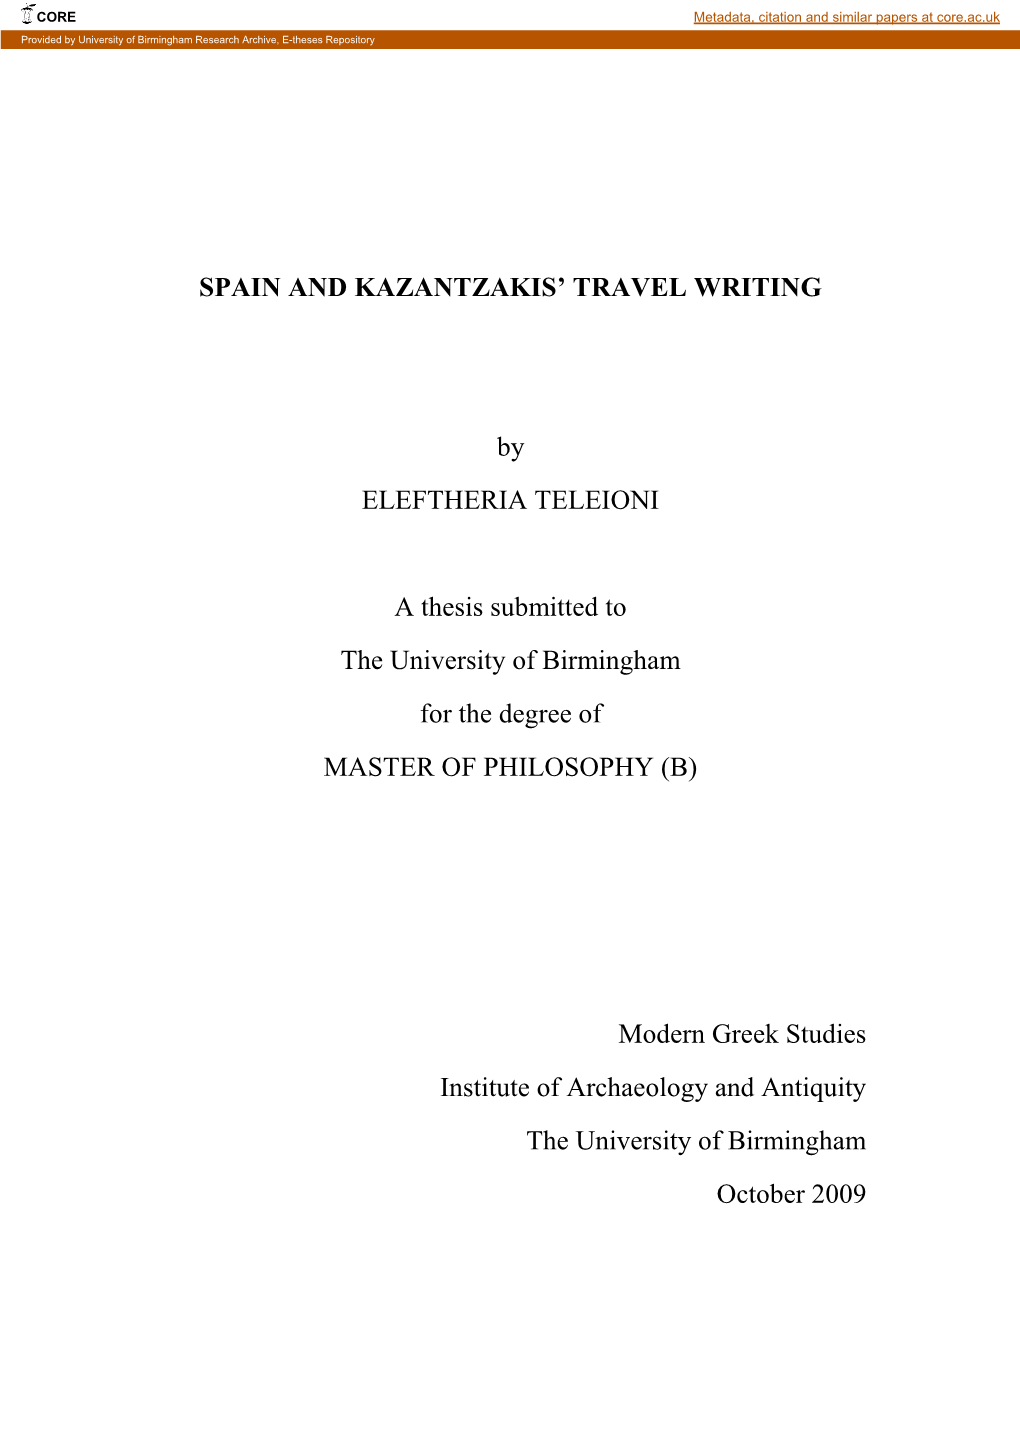 Spain and Kazantzakis' Travel Writing